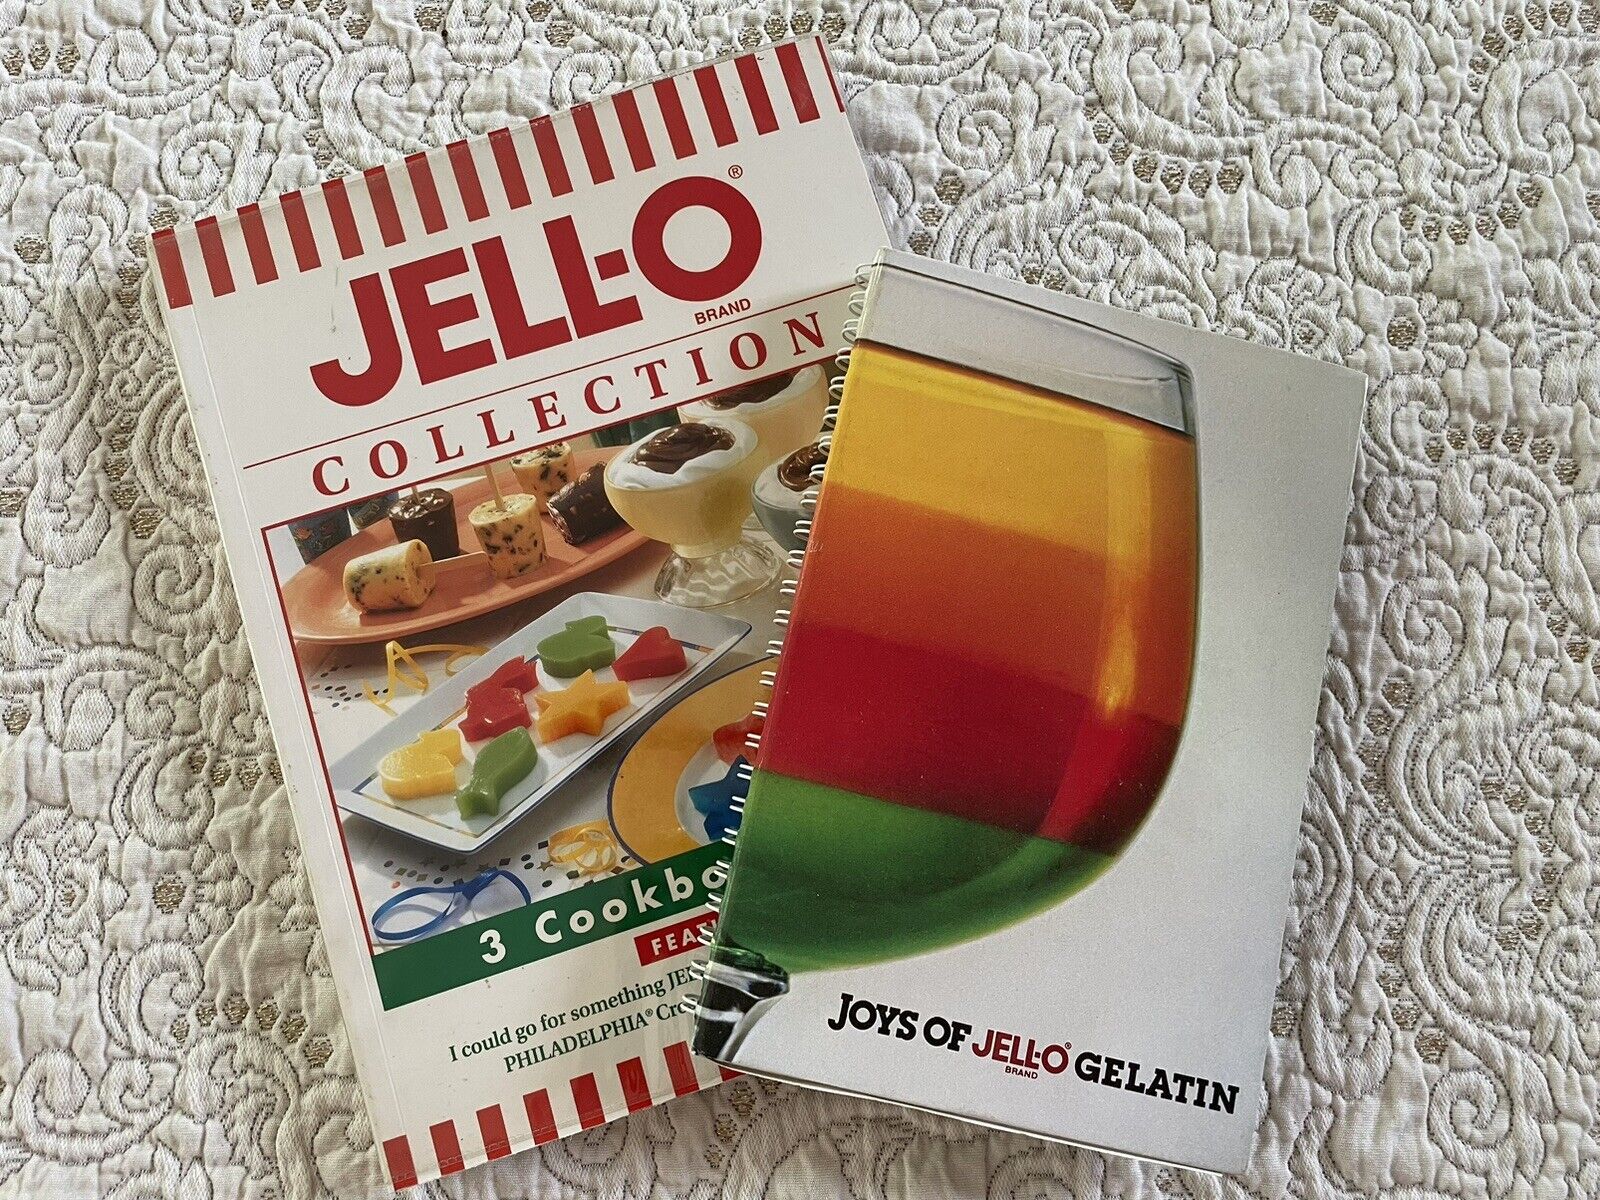 Jello Vintage Cookbook Duo Collection 3 in 1 & Joys Of Jello Spiral 2001 & 1981